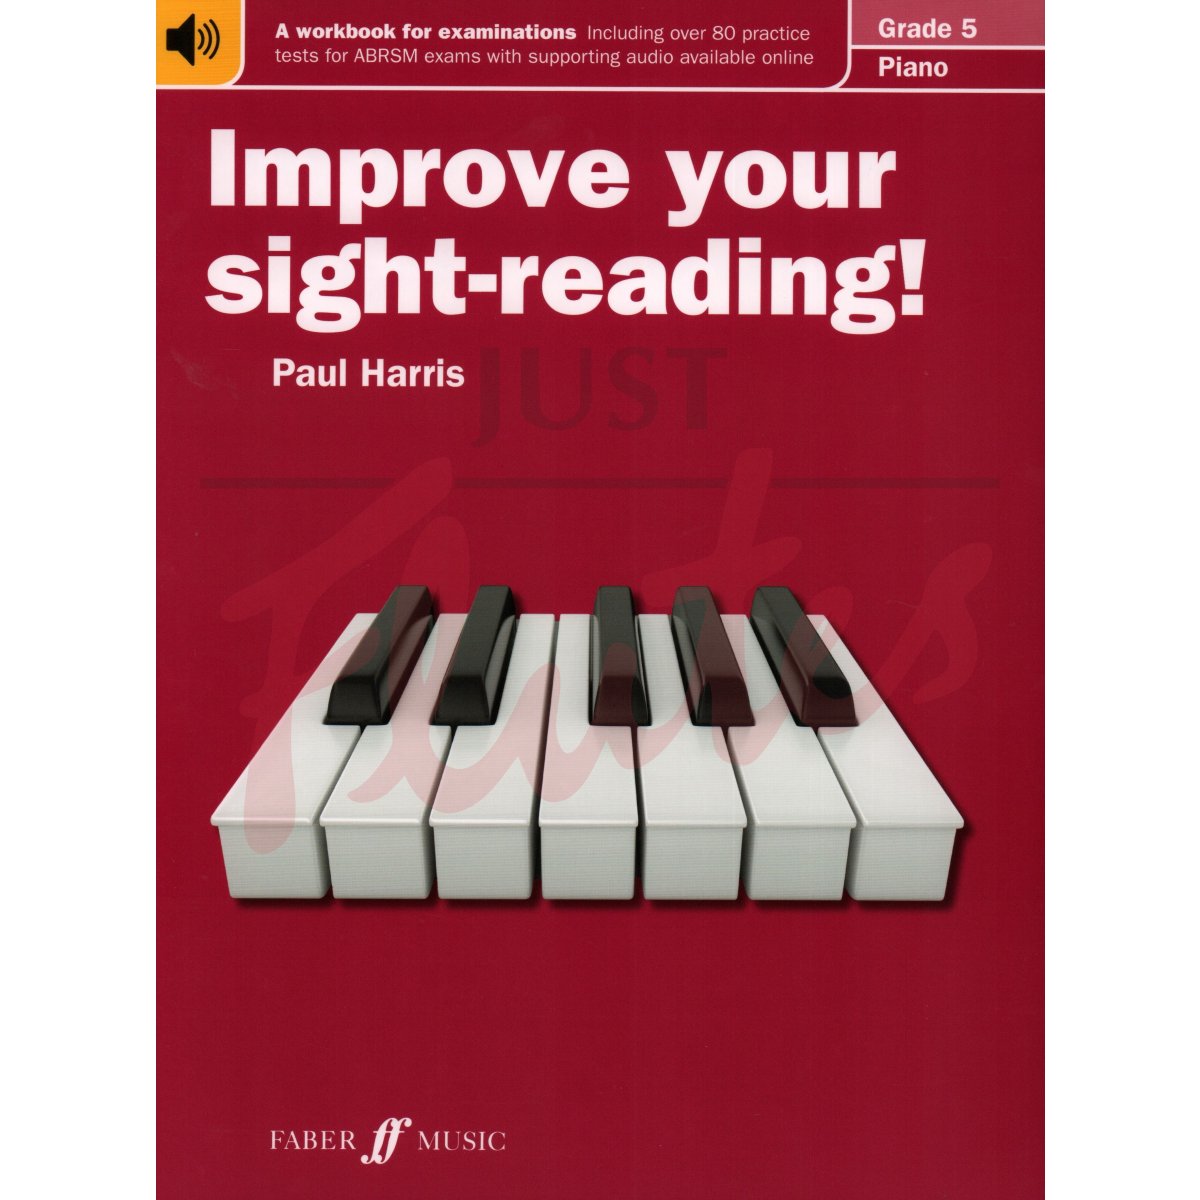 Improve Your Sight-Reading! [Piano] Grade 5